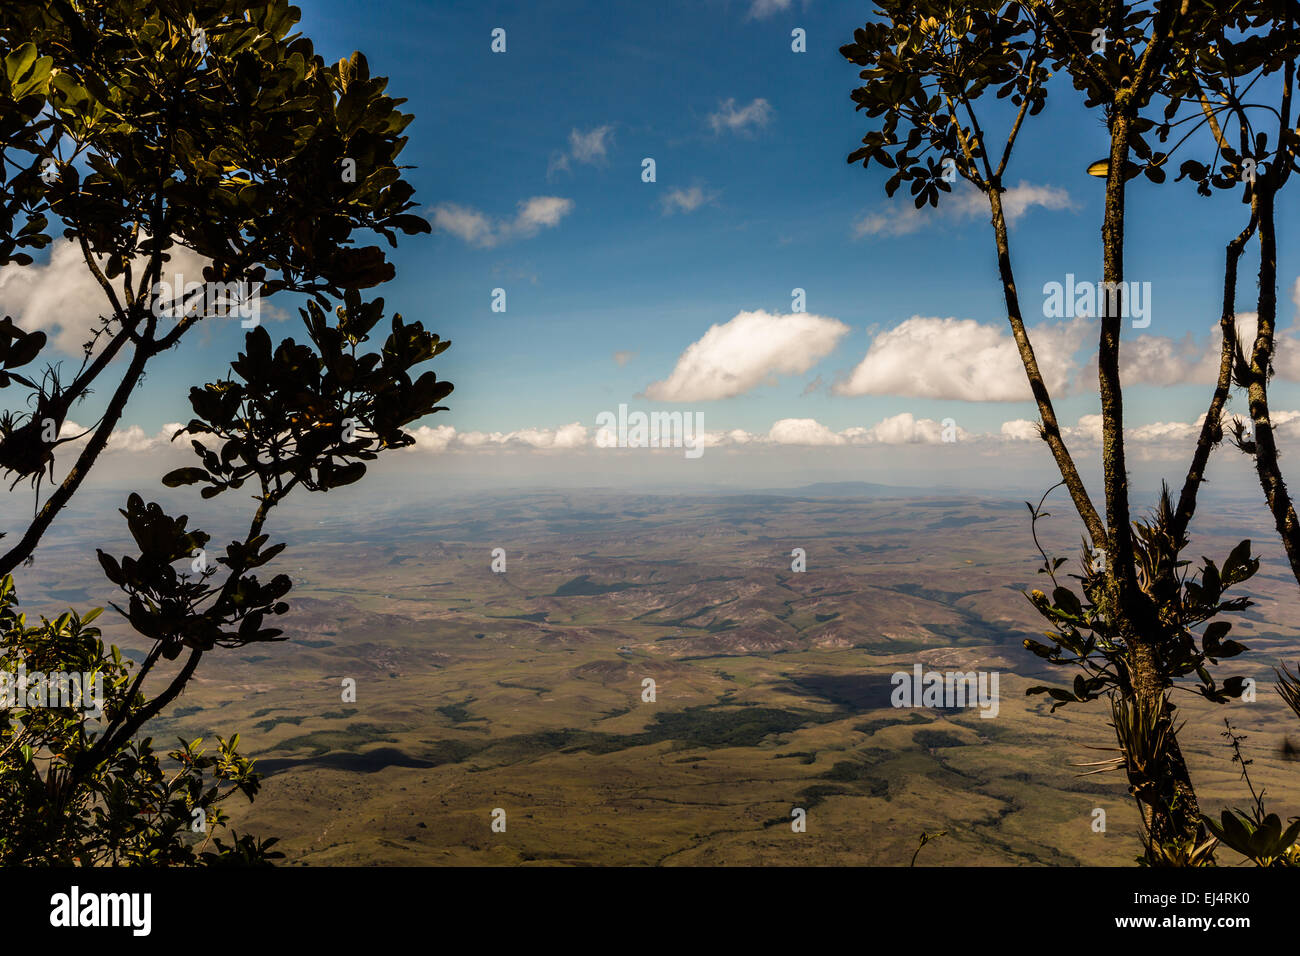 View from the plateau Roraima to Gran Sabana region - Venezuela, South America Stock Photo